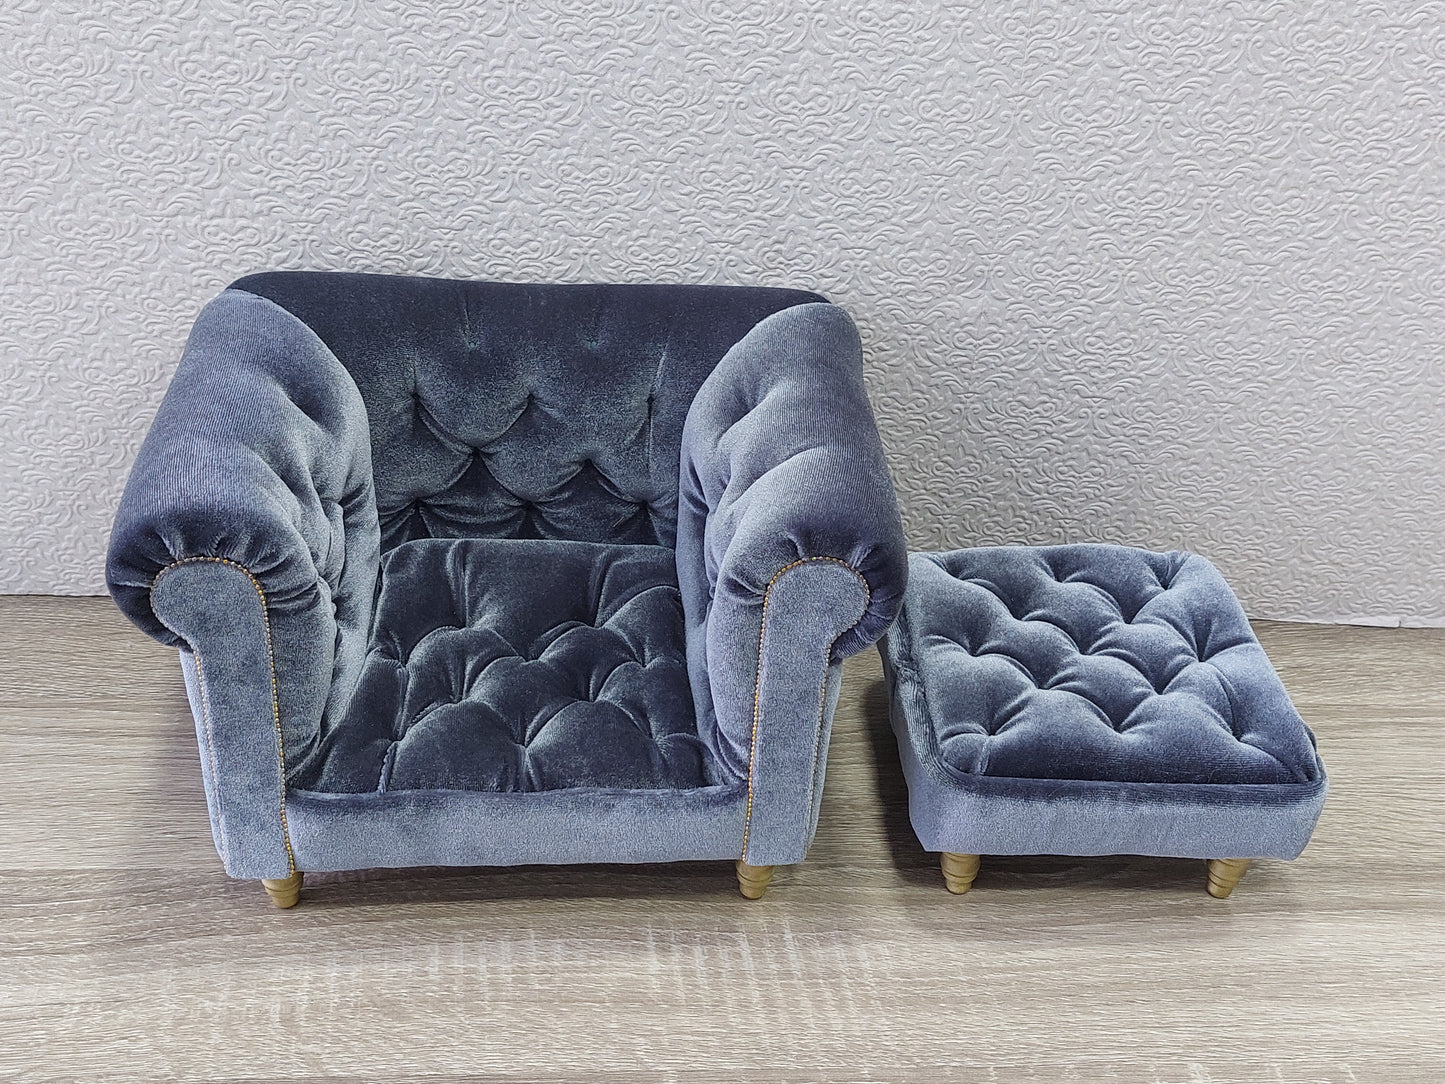 Chesterfield armchair with ottoman, gray velvet